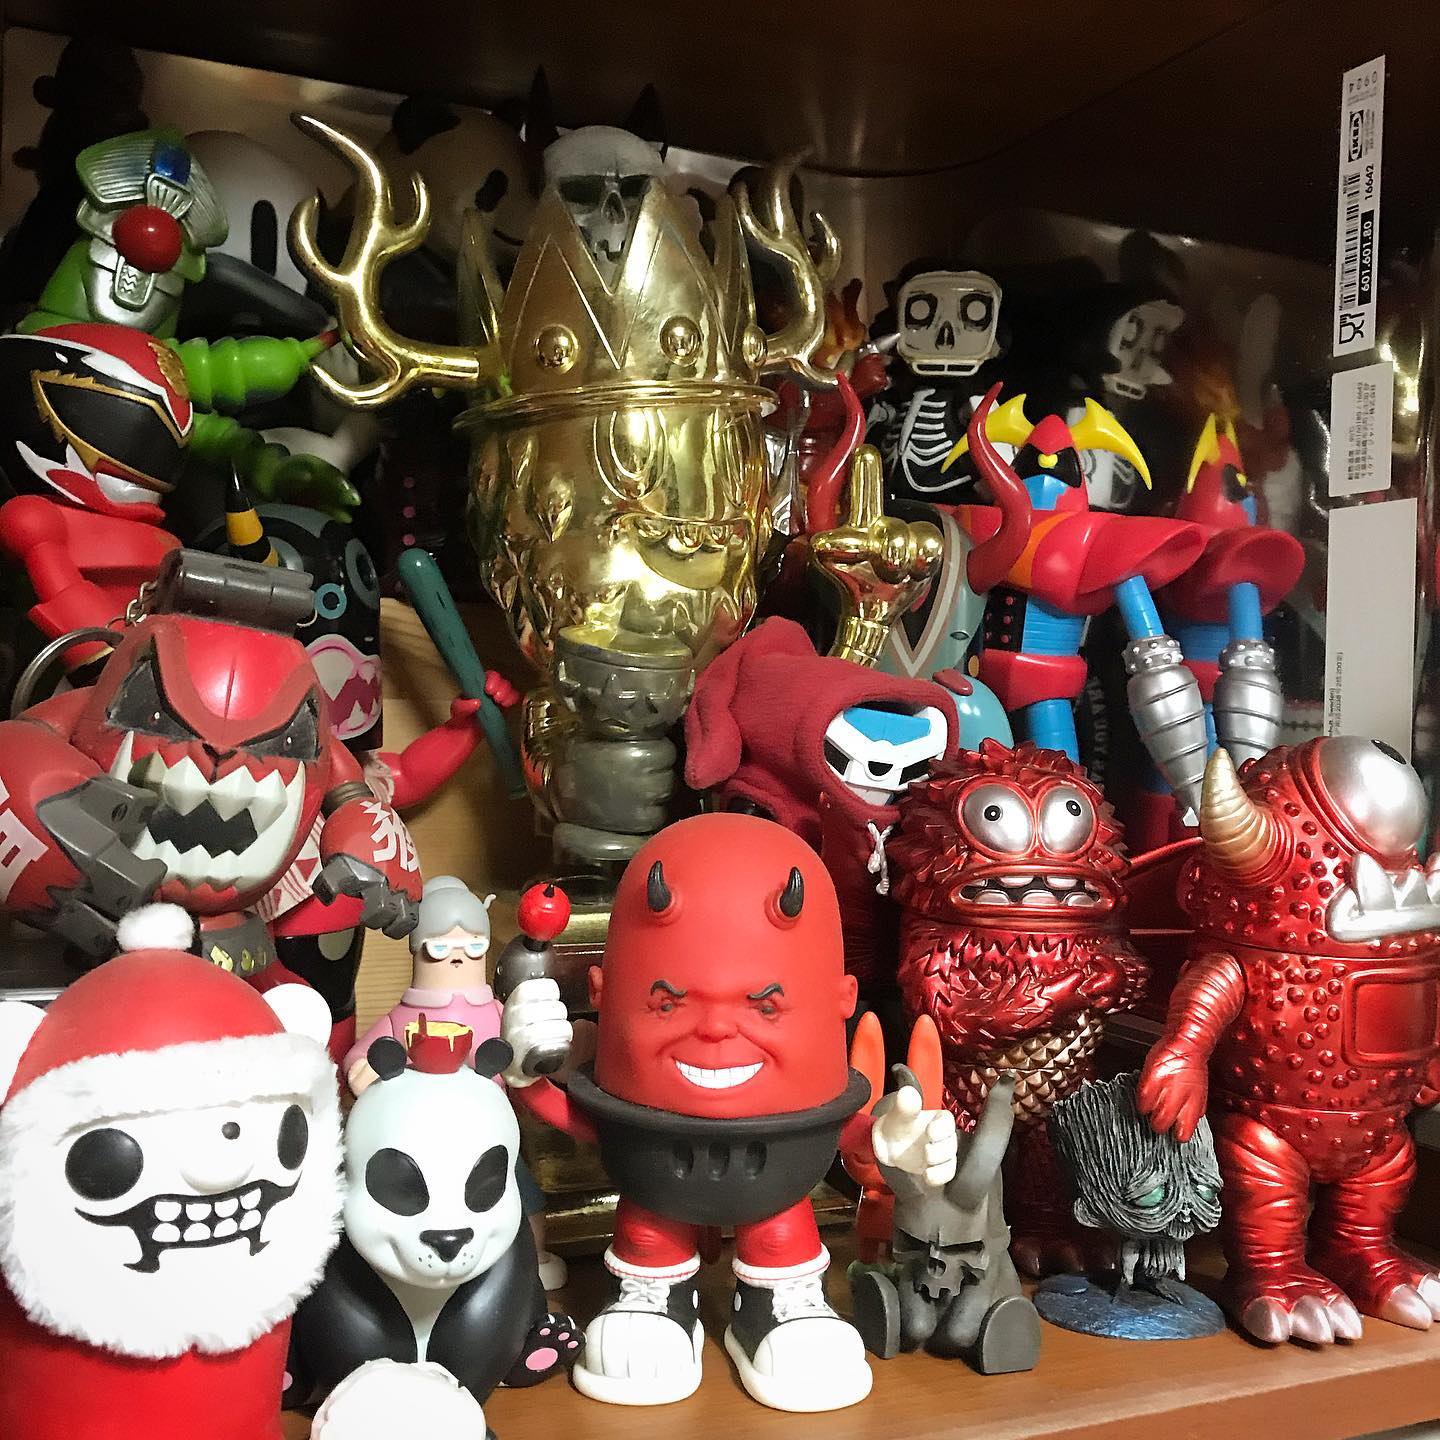 Lot of rambo figurine on a supermarket shelf on Craiyon